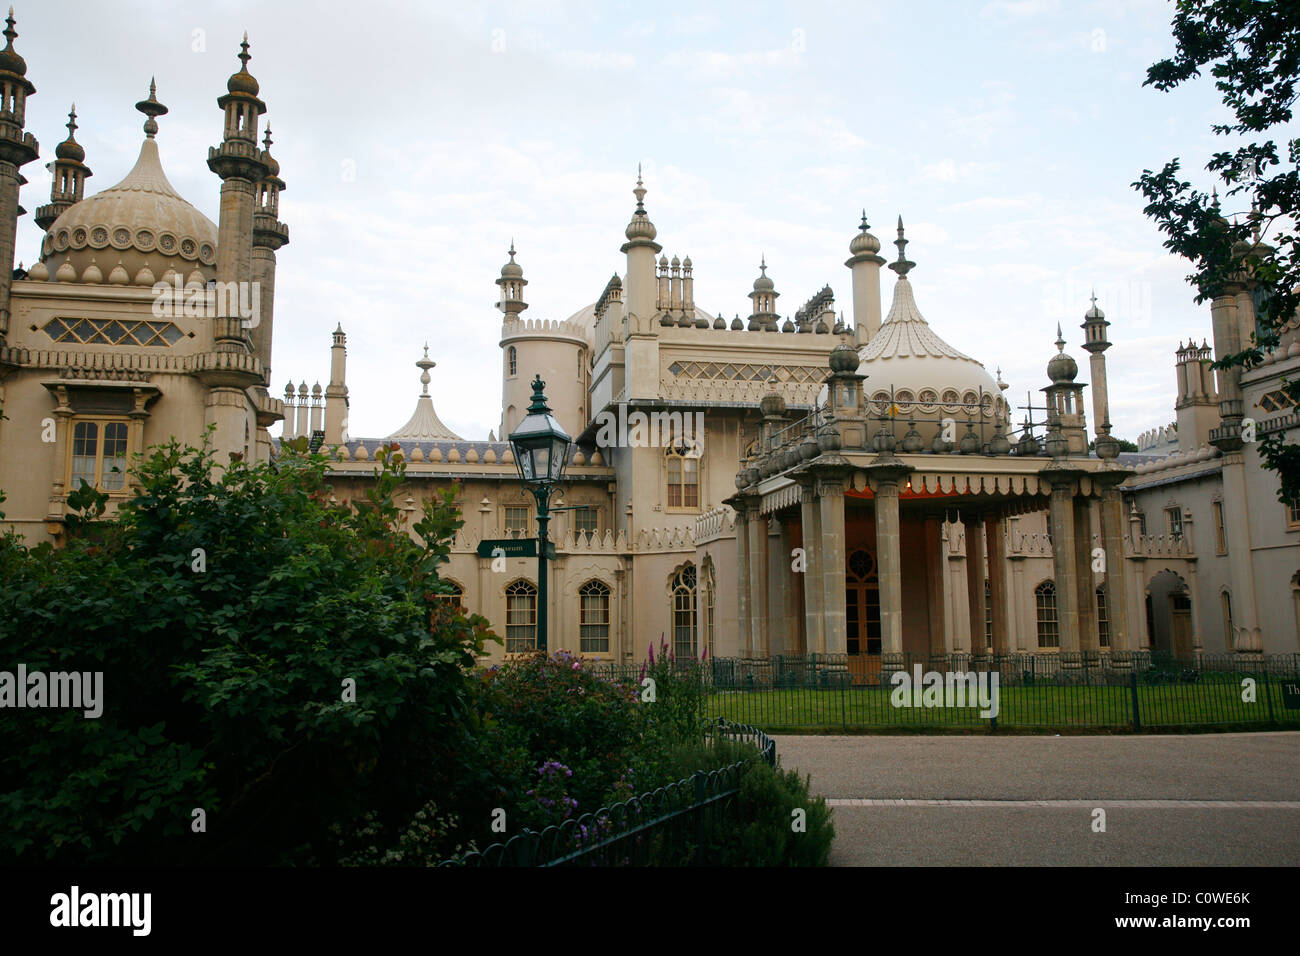 The Royal Pavilion, Brighton, England, UK. Stock Photo